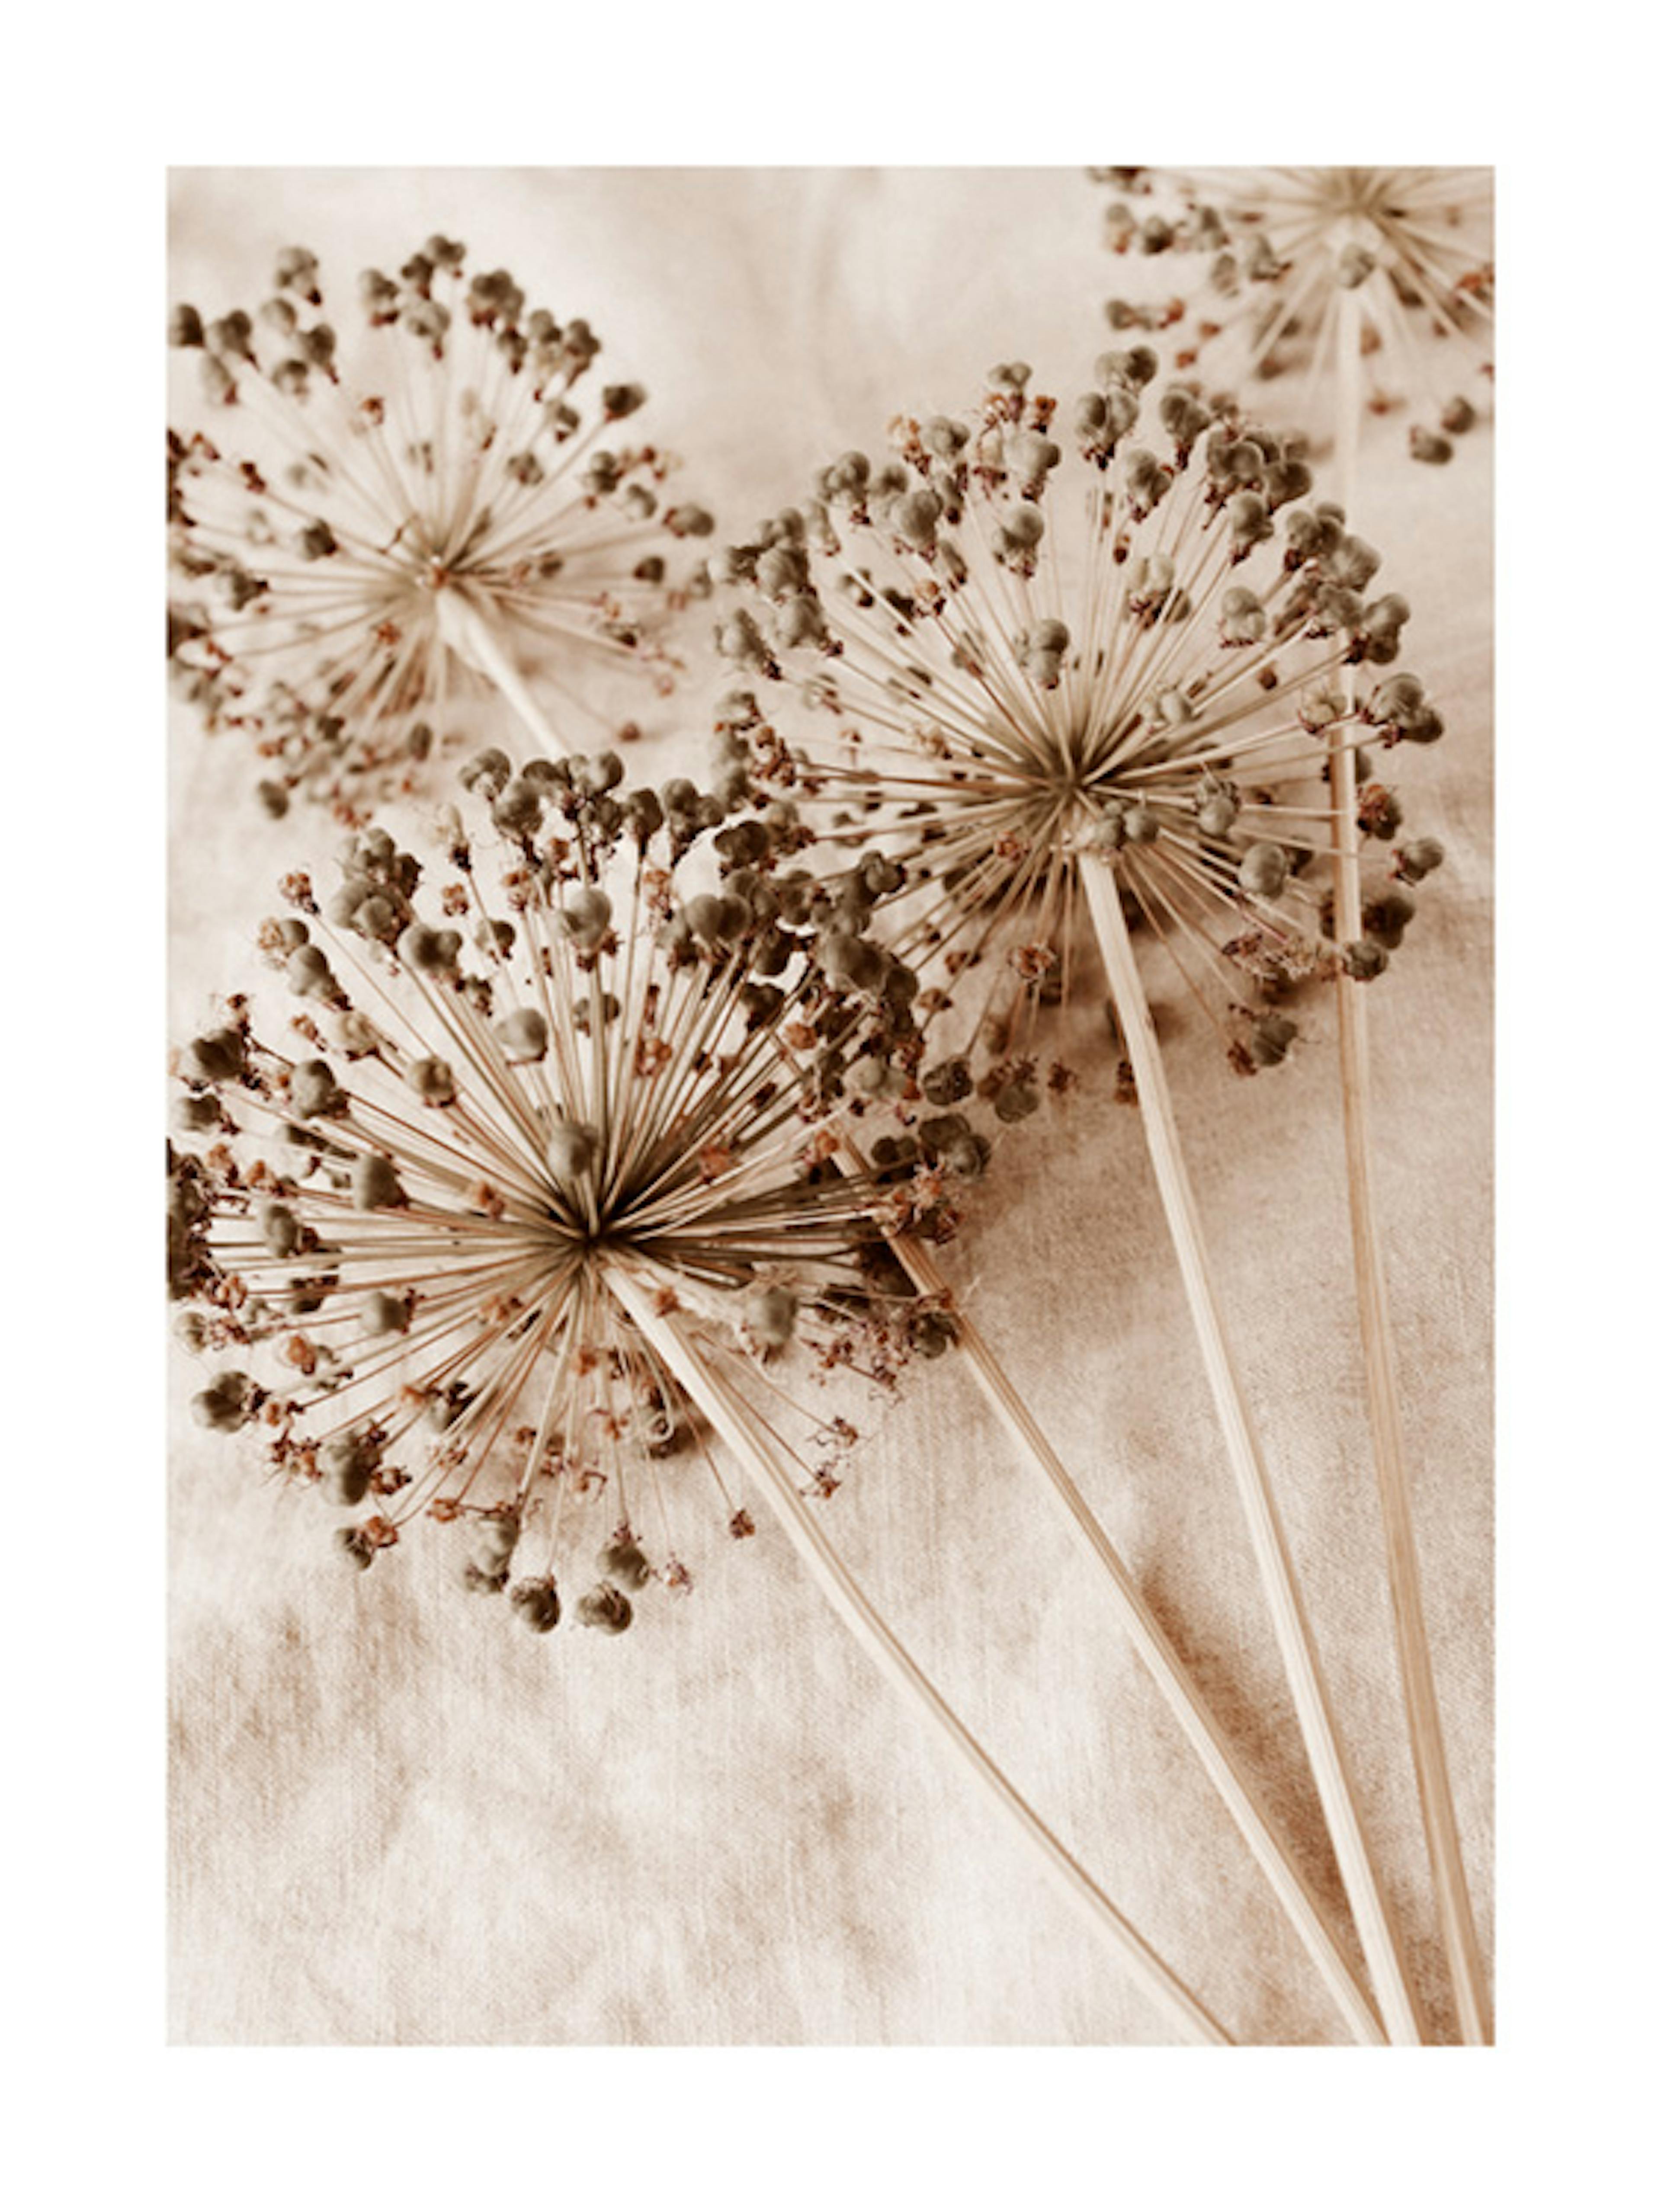 Dry Allium Flowers Poster 0